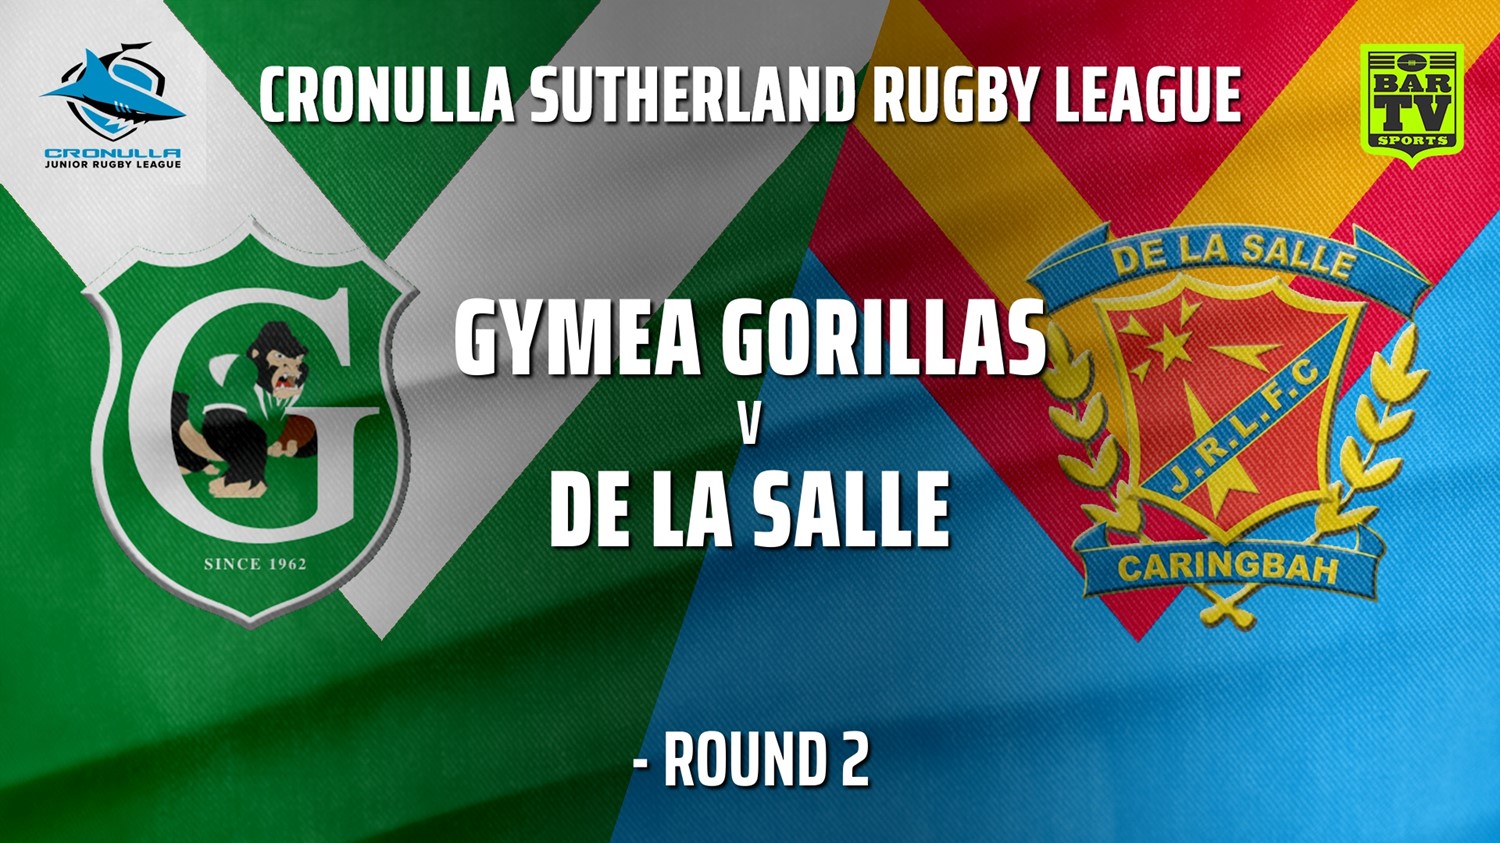 210508-Cronulla JRL Under 10s GOLD Round 2 - Gymea Gorillas v De La Salle Minigame Slate Image